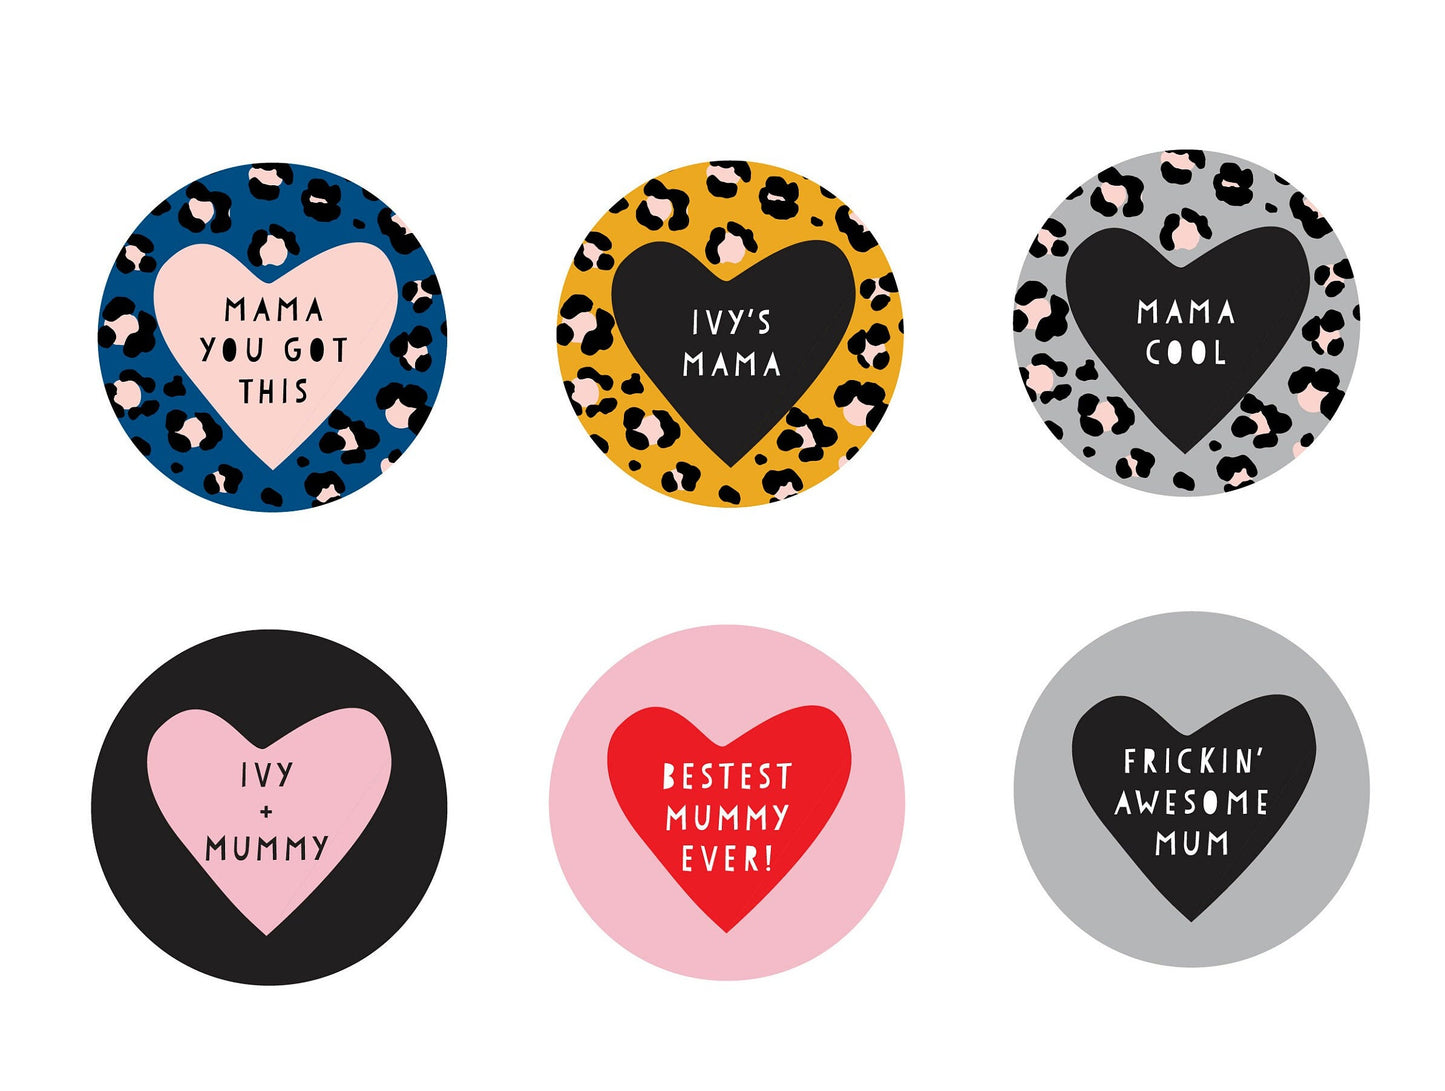 Personalised Leopard / Colour Pop  Print Key rings